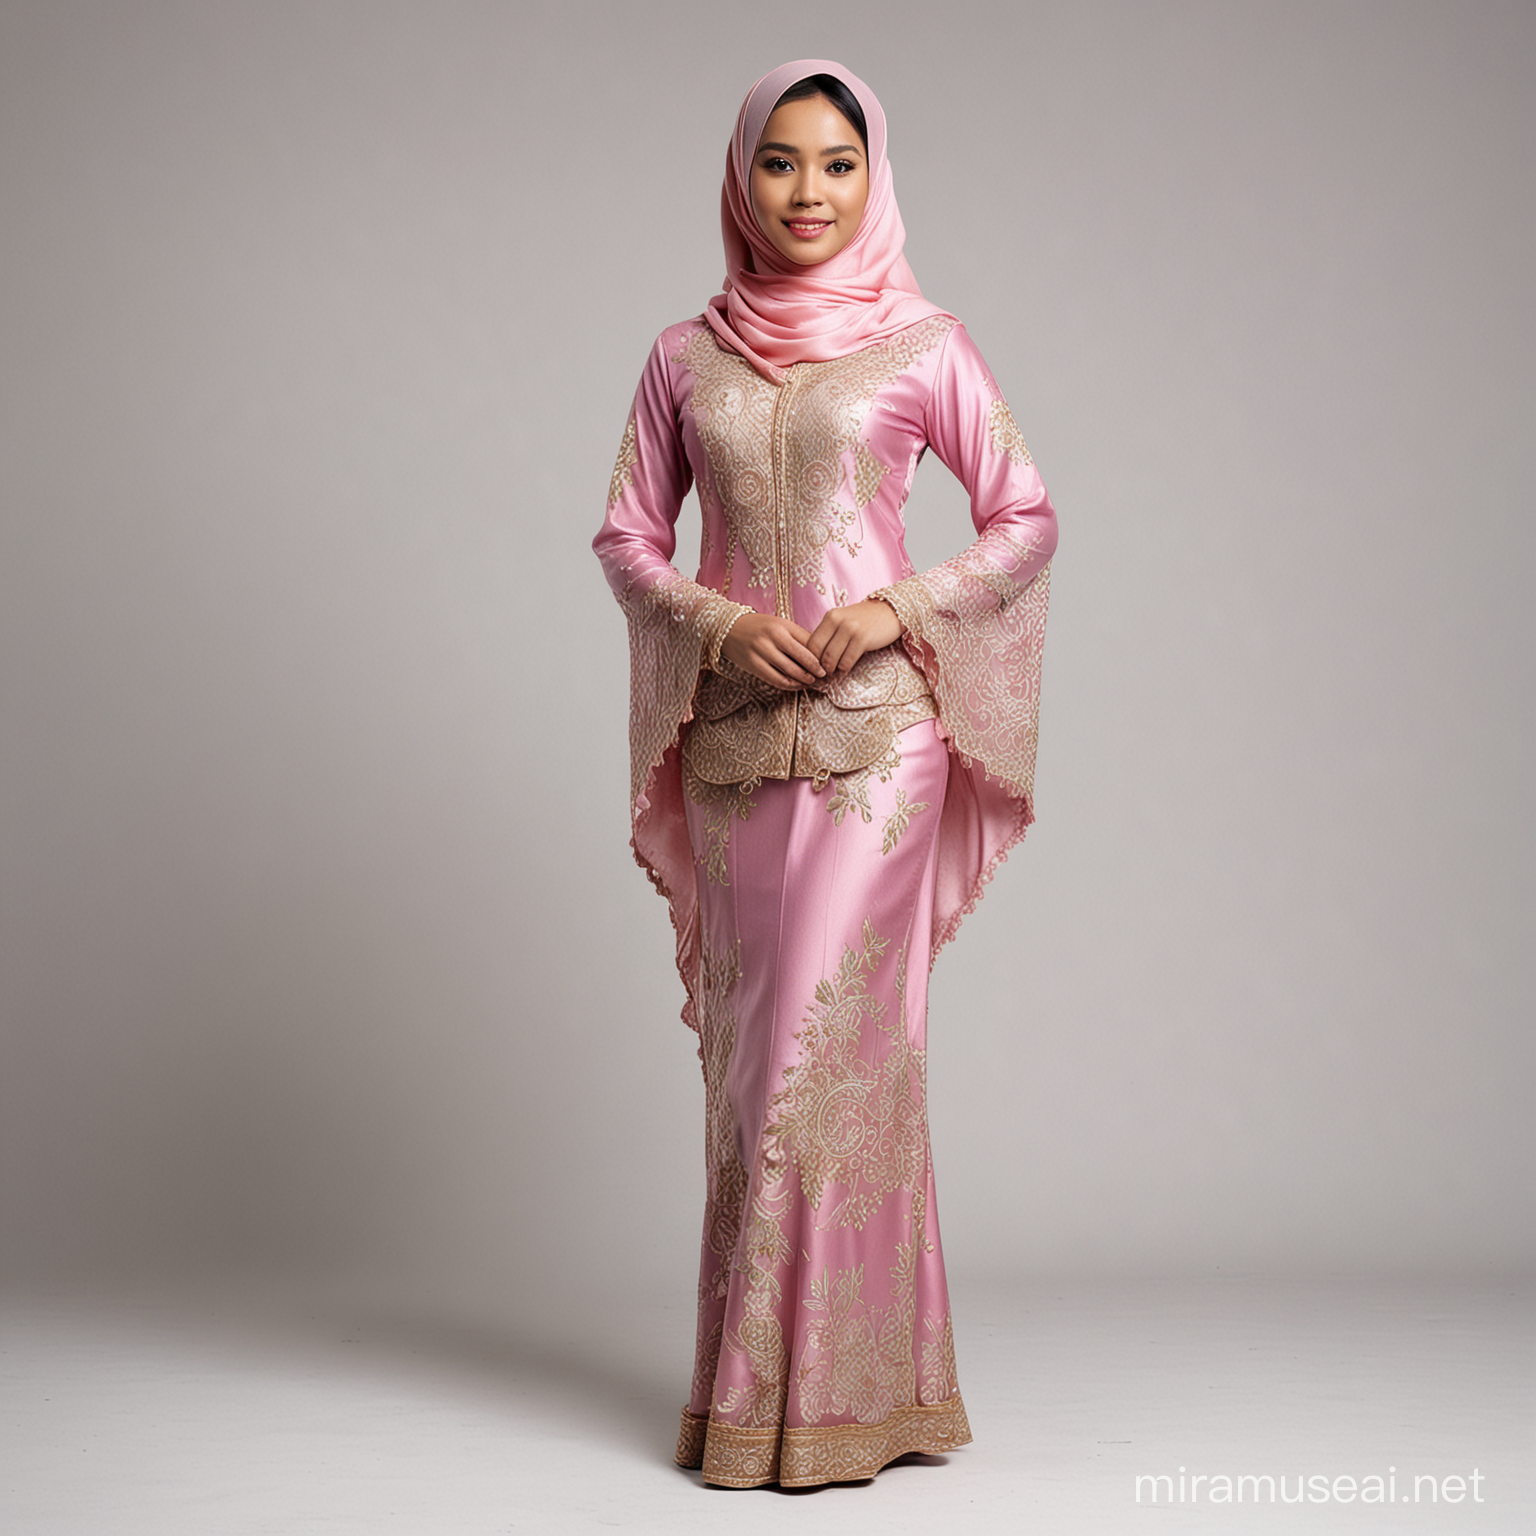 malay girl wearing traditional kebaya, full body with hijab

